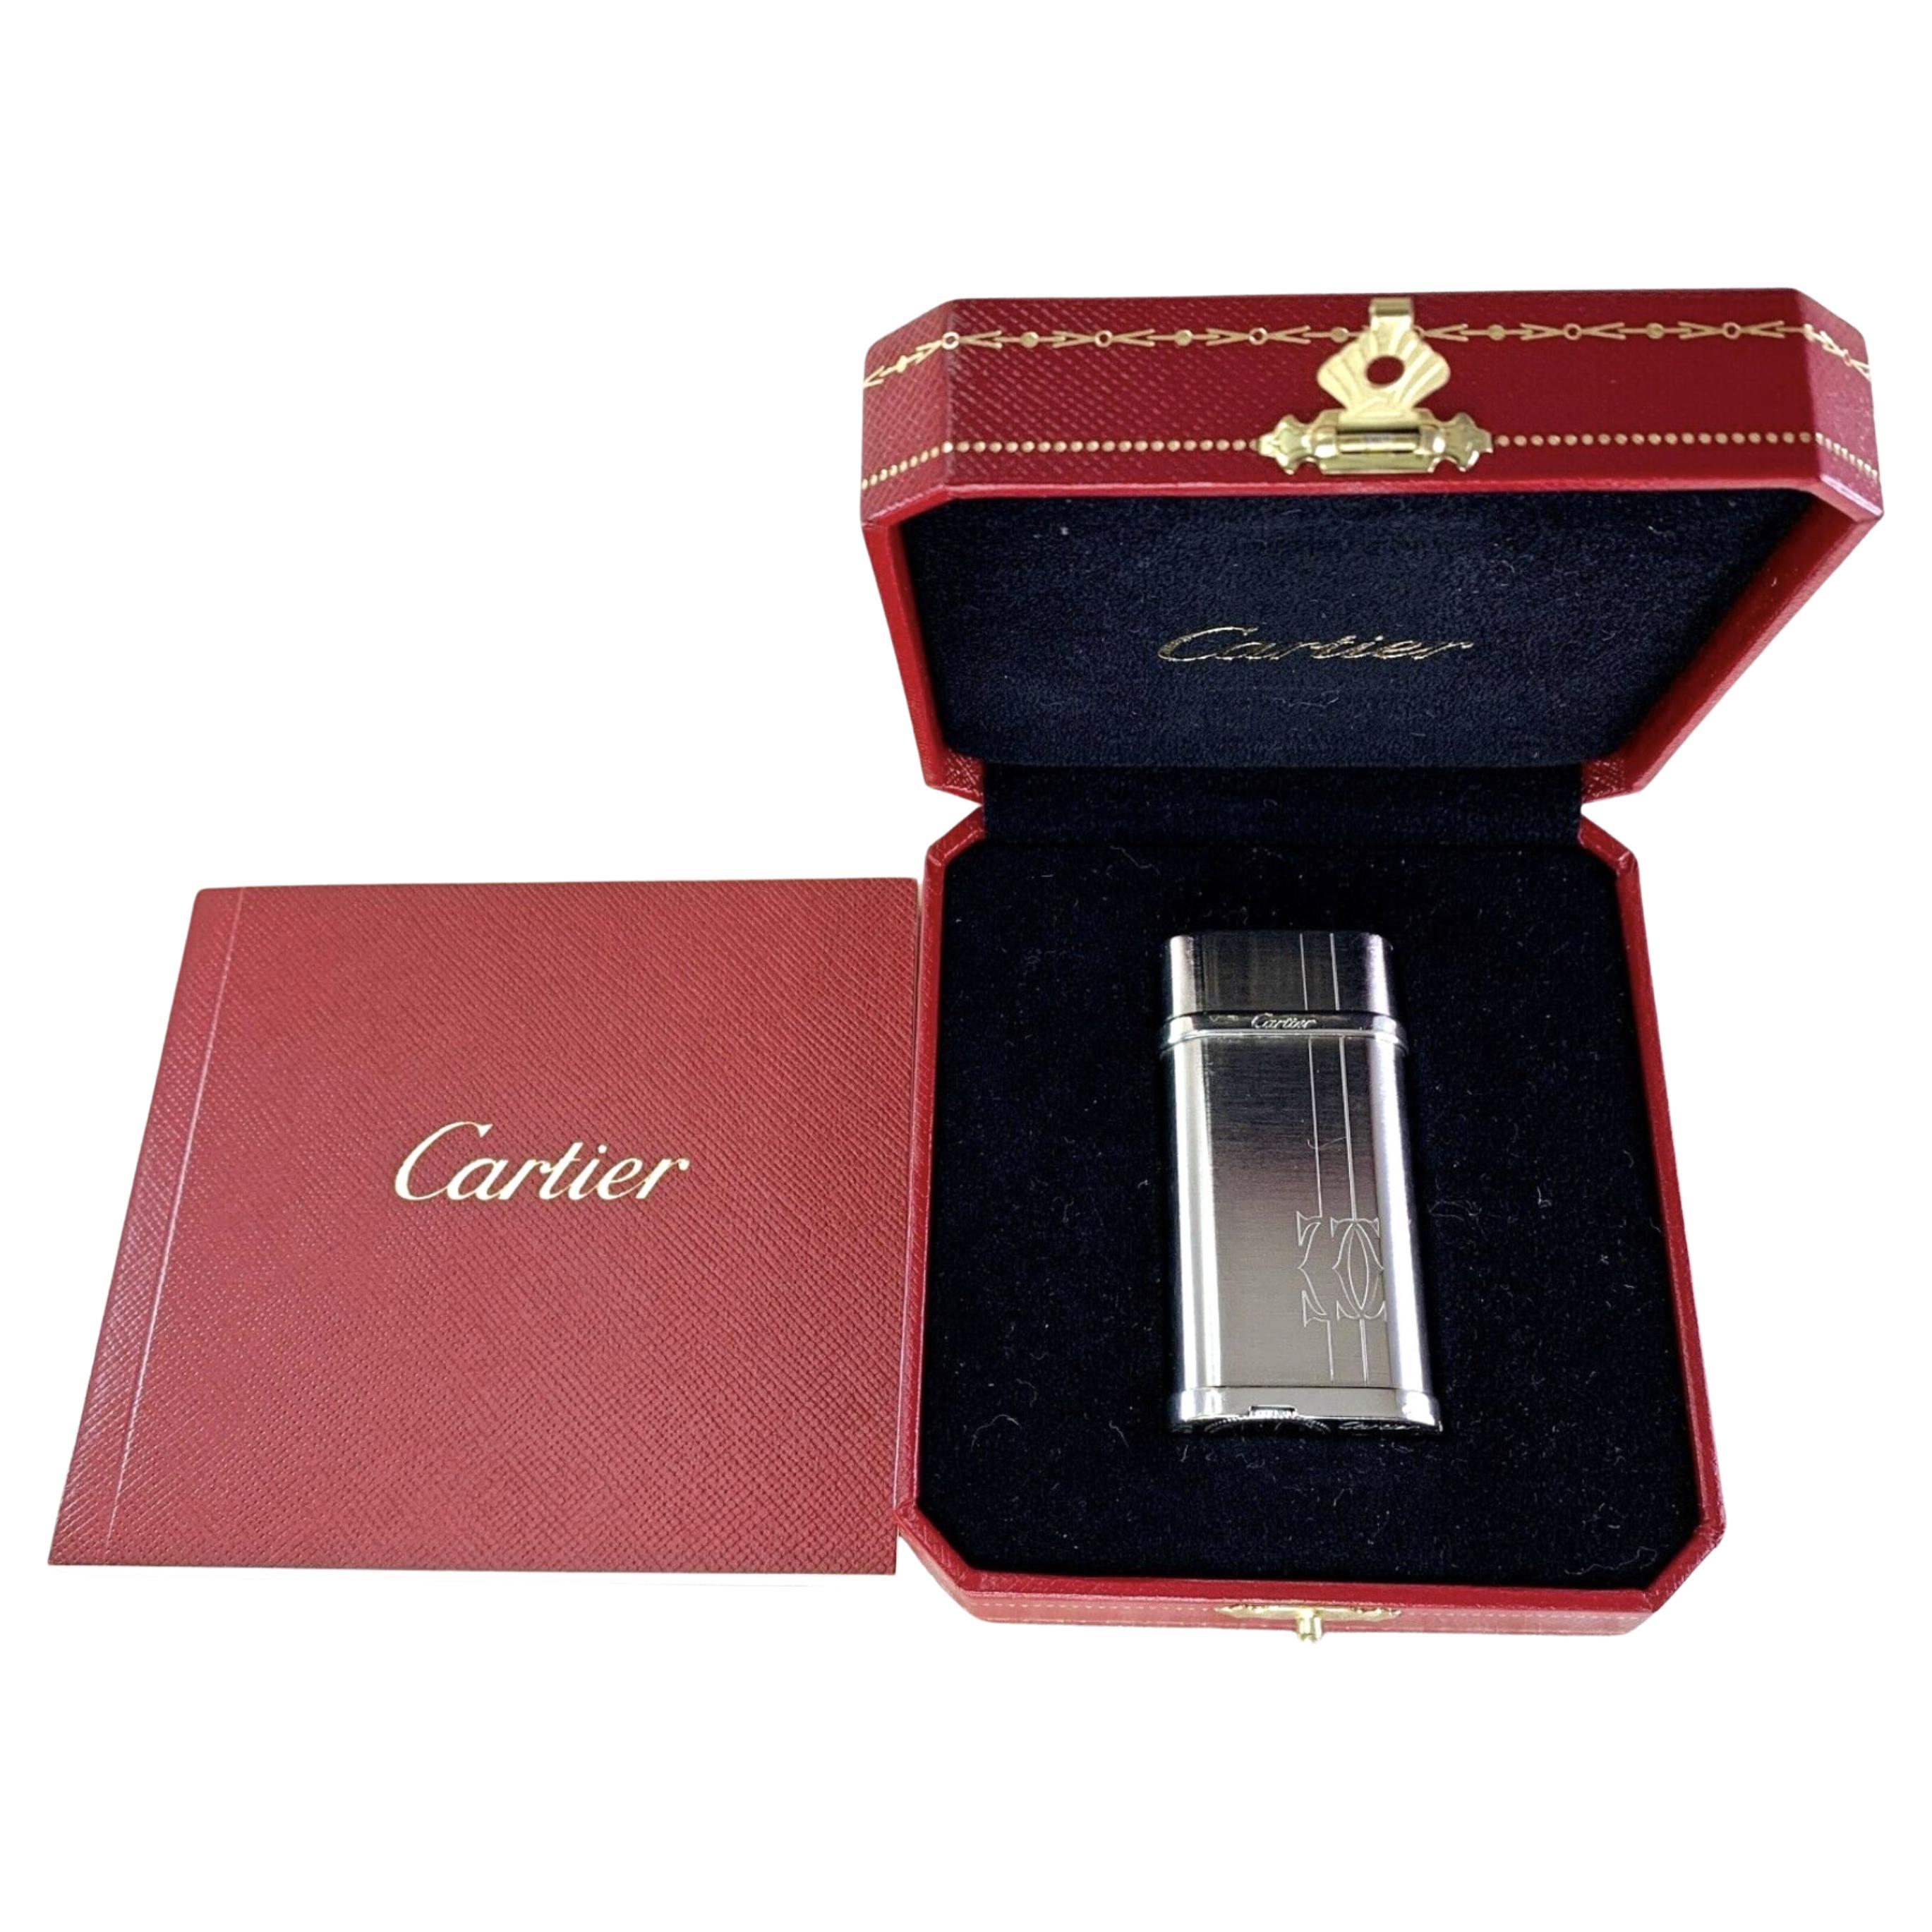 Le Must De Cartier Logo Lines Decor Palladium Lighter & Cartier Case